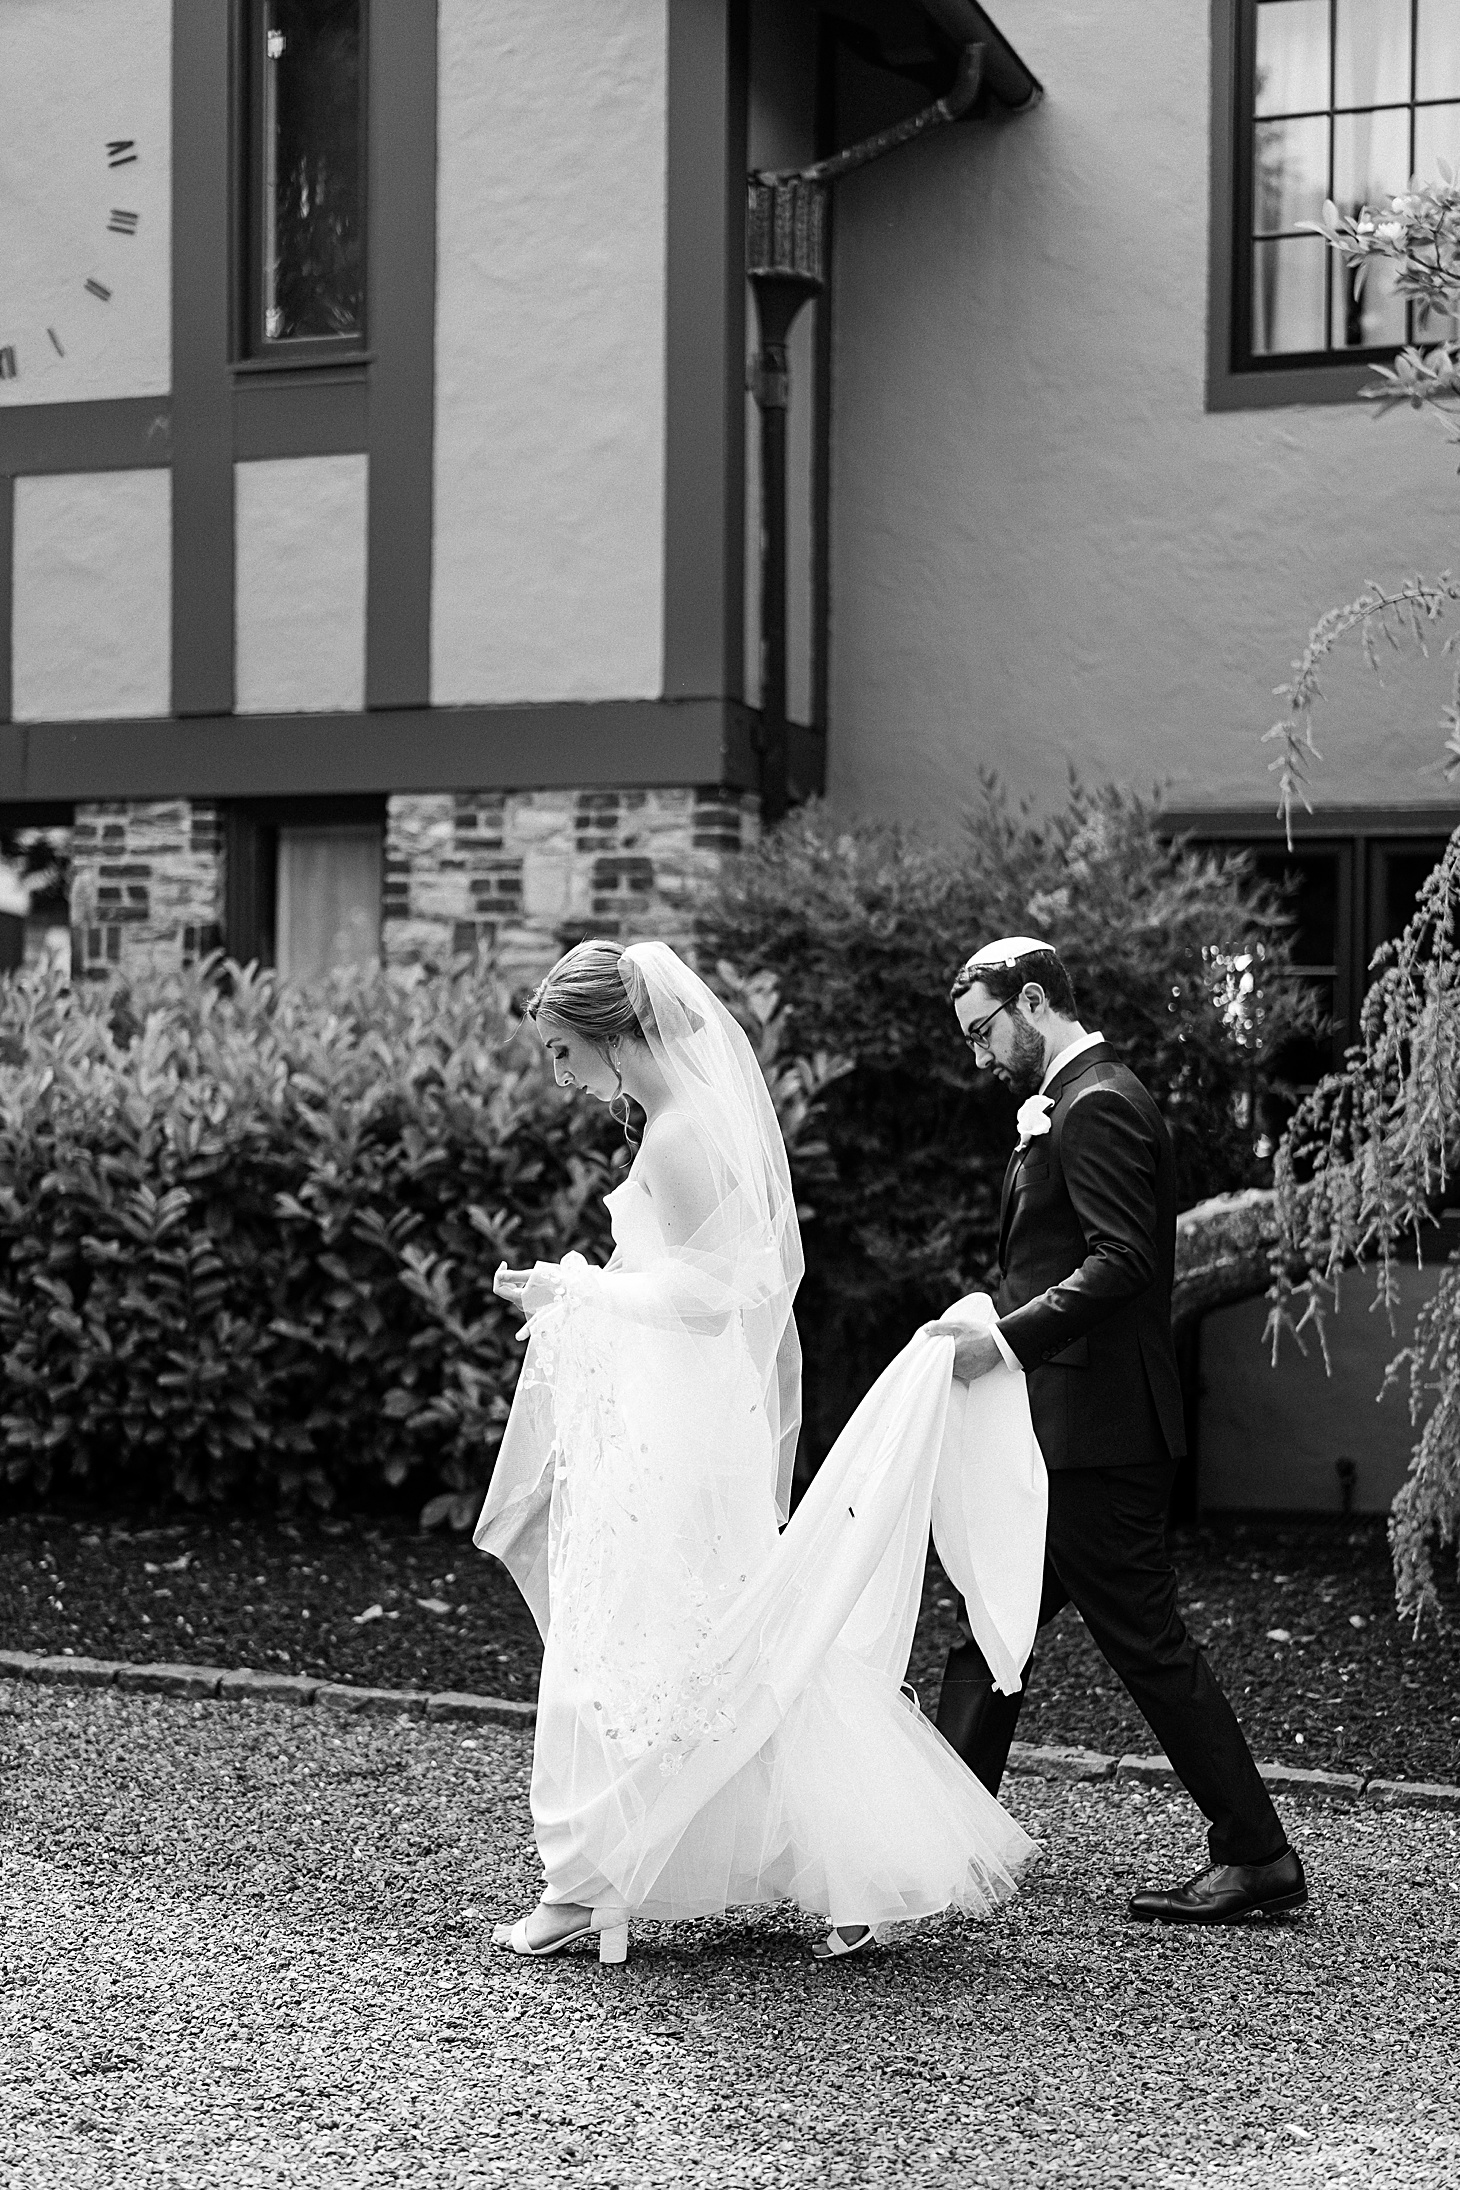 Jewish bride & groom | Modern Music-Inspired Jewish Wedding at Private Estate by Sarah Bradshaw